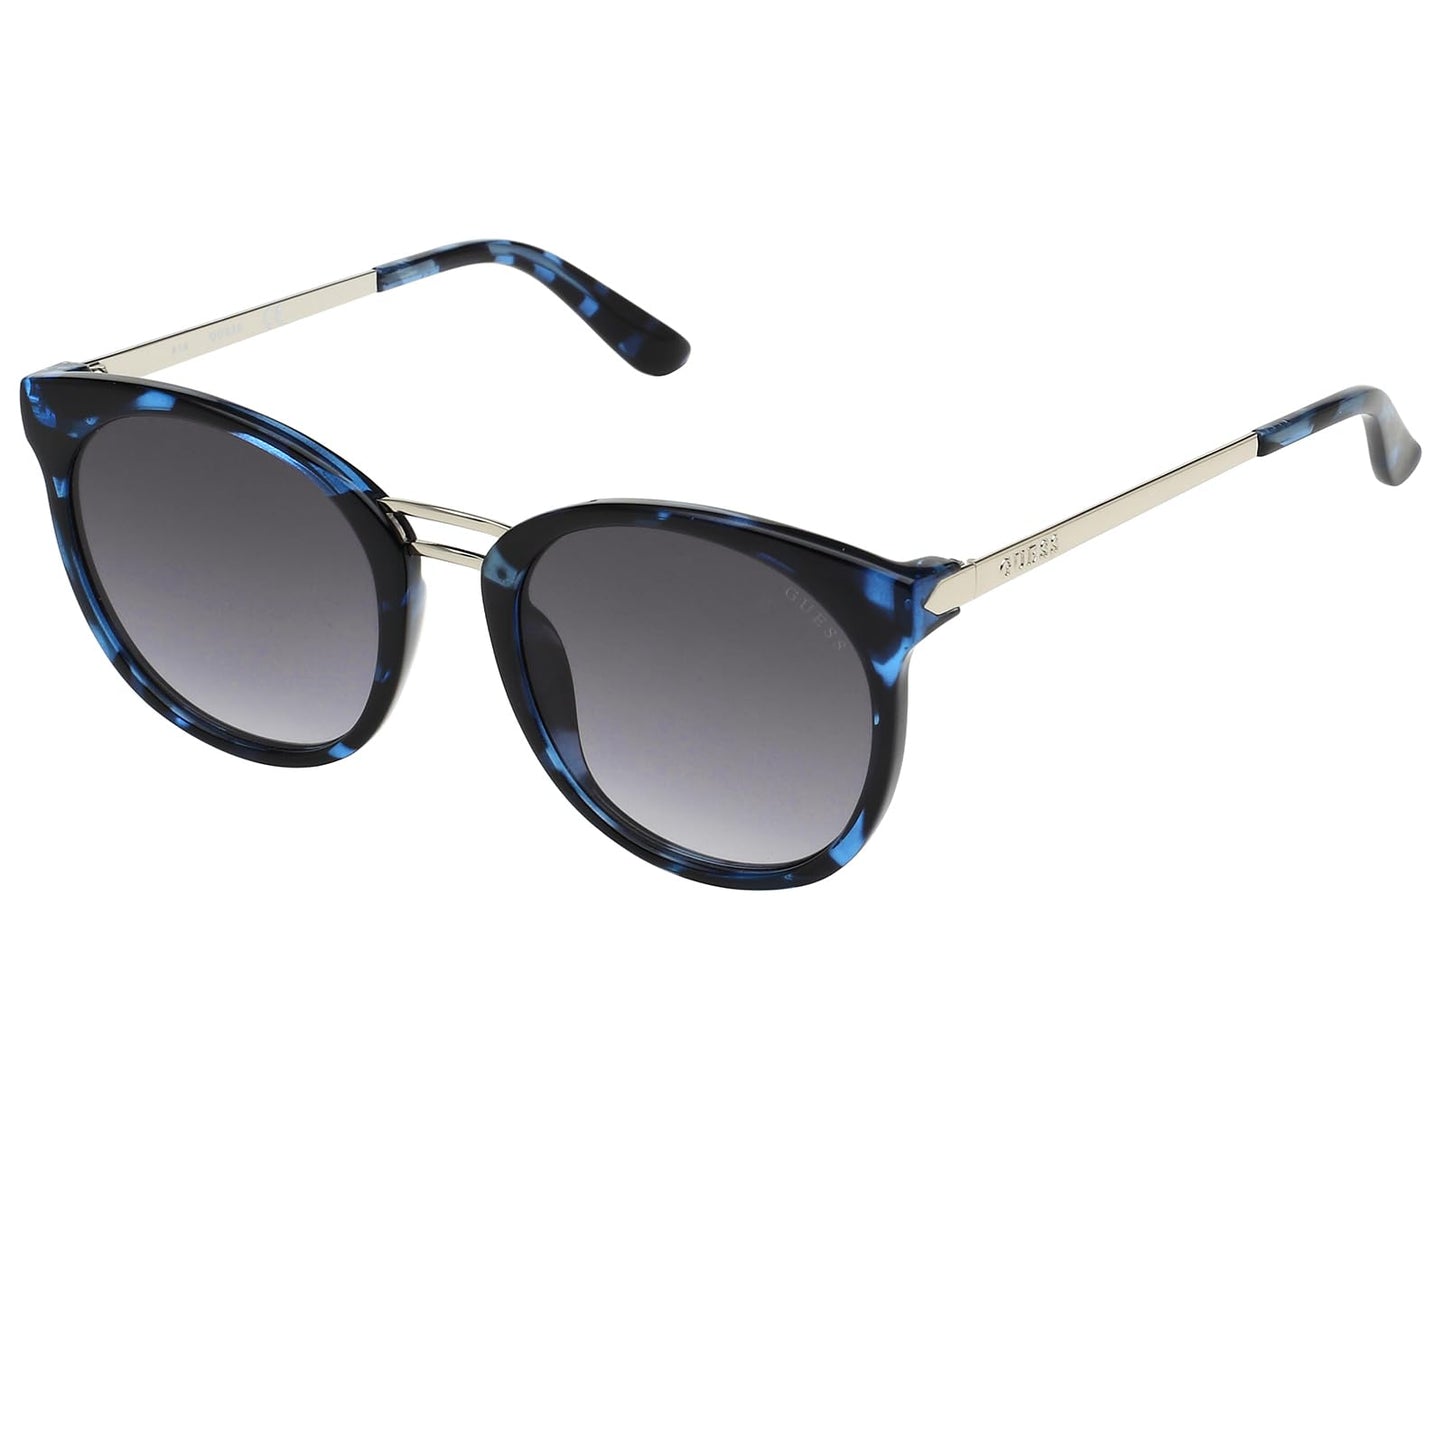 Guess Gradient Oval Women Sunglasses -(GU7568 92B 52 S |52| Grey Color Lens)